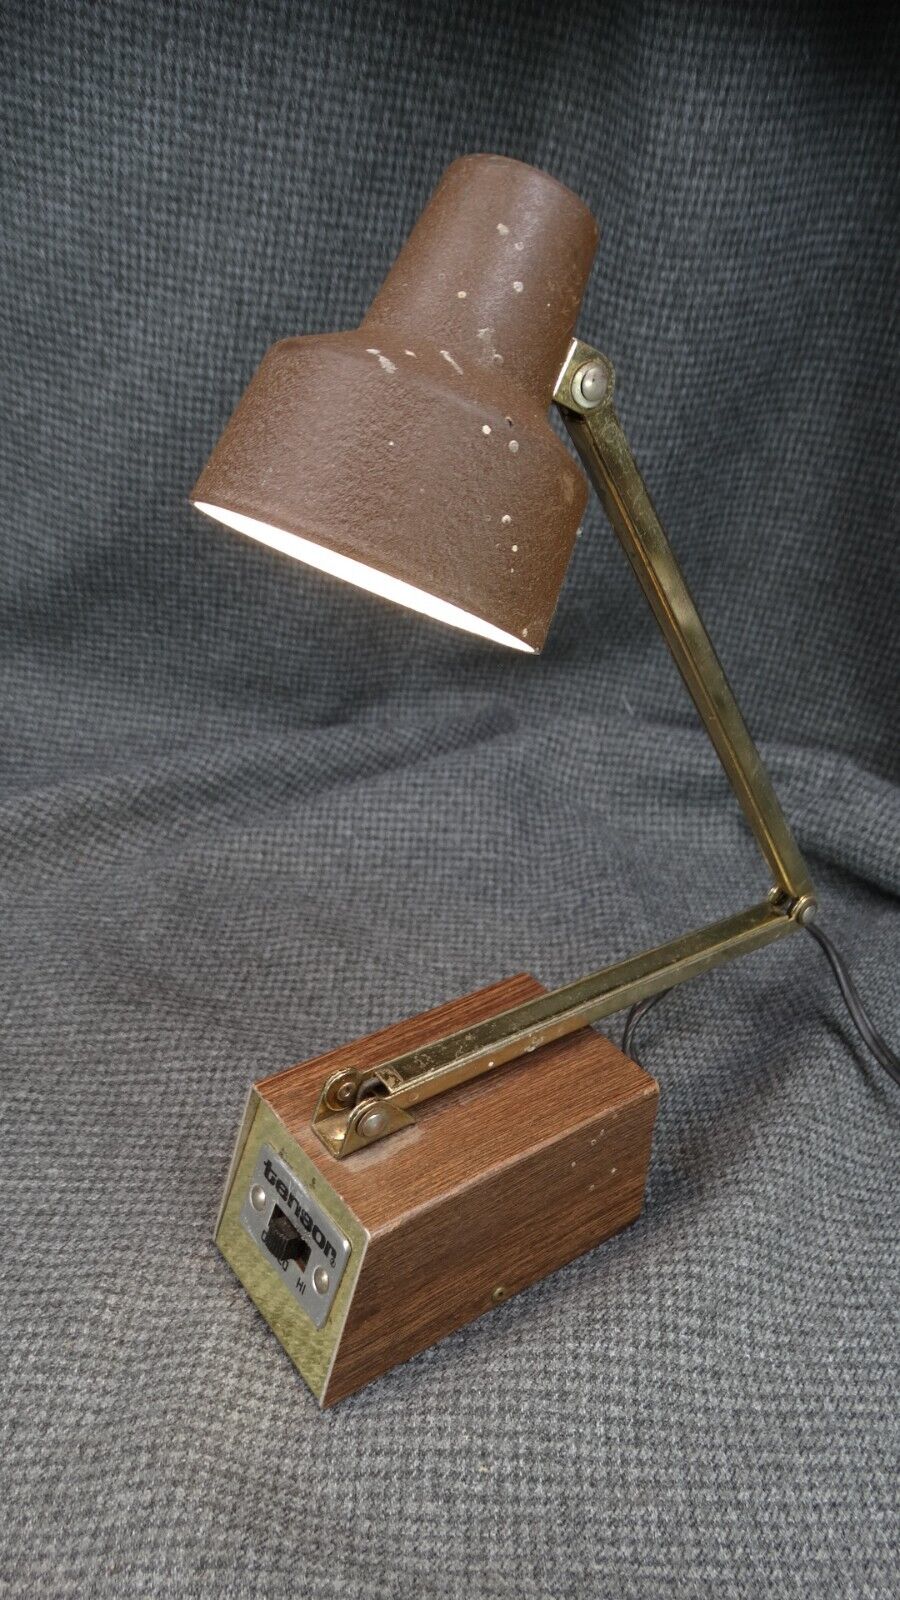 B7 Vintage Tensor Desk Lamp Woodgrain Look, Hi Lo Switch - Working